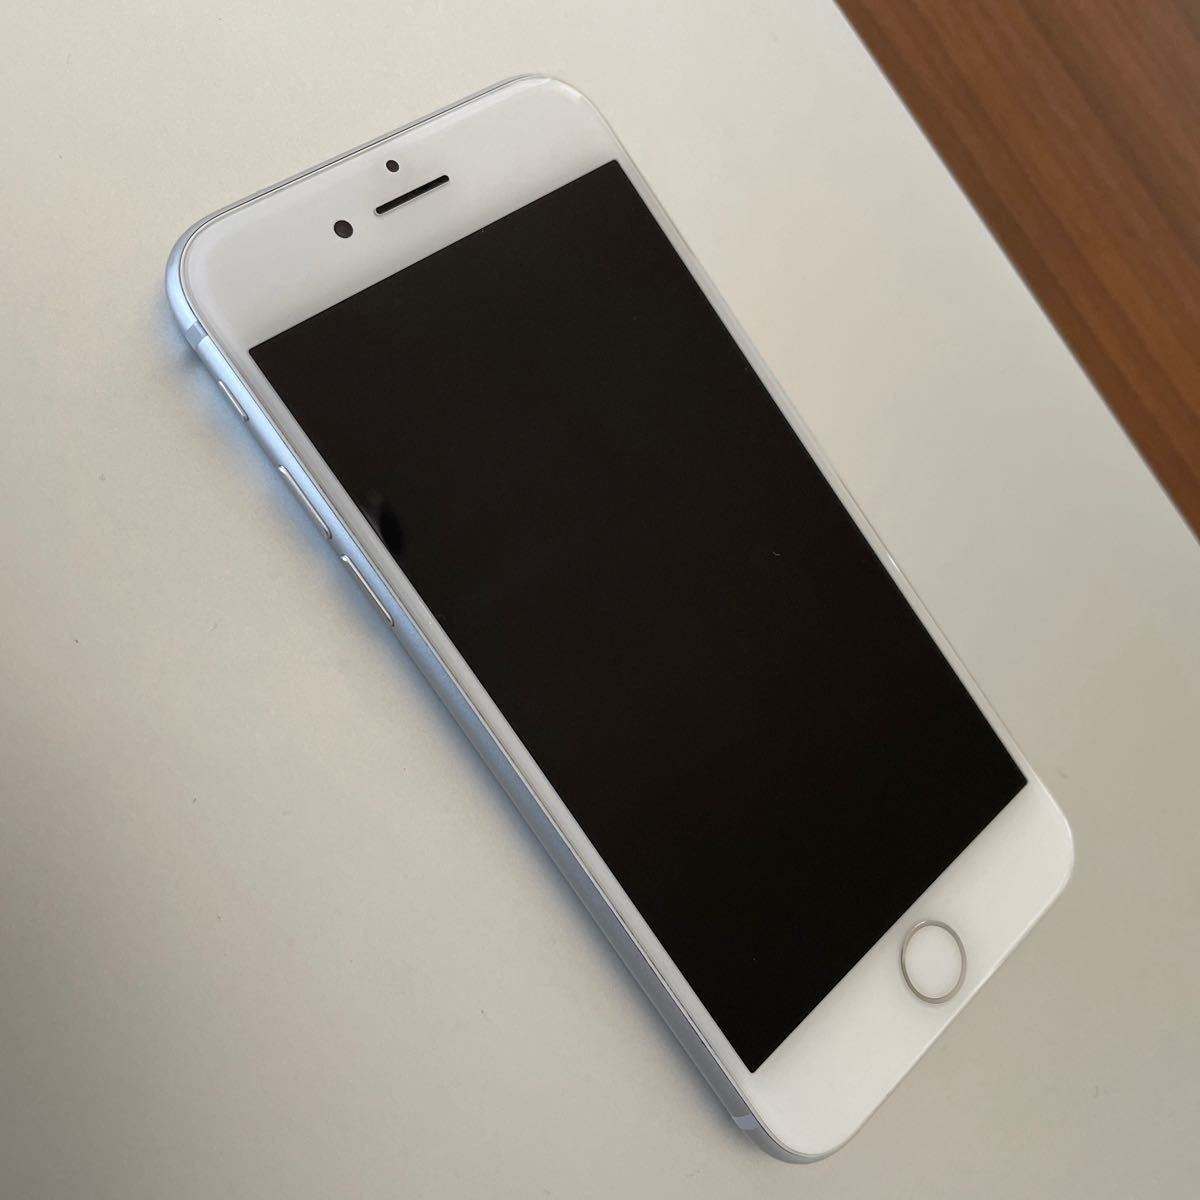 iPhone 8 Silver シルバー 256GB SIMフリー 75% おまけ→iPhone 6 Plus 